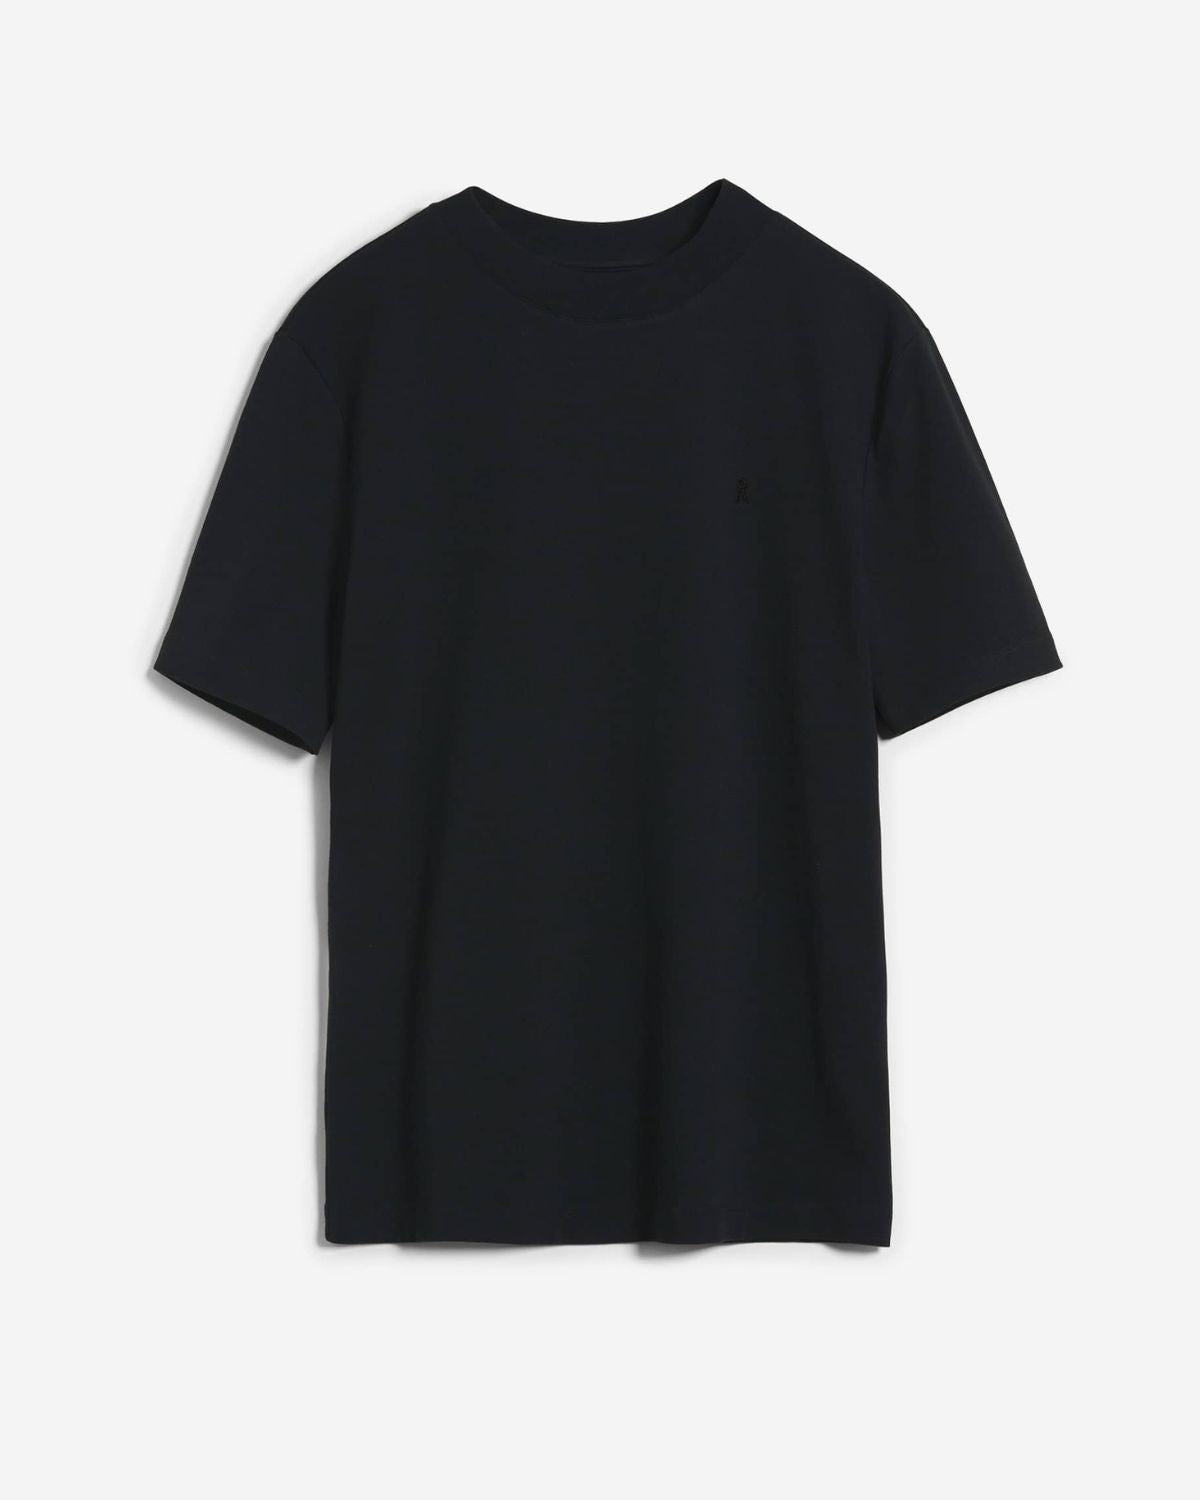 Taraa Black - T-Shirt Damen